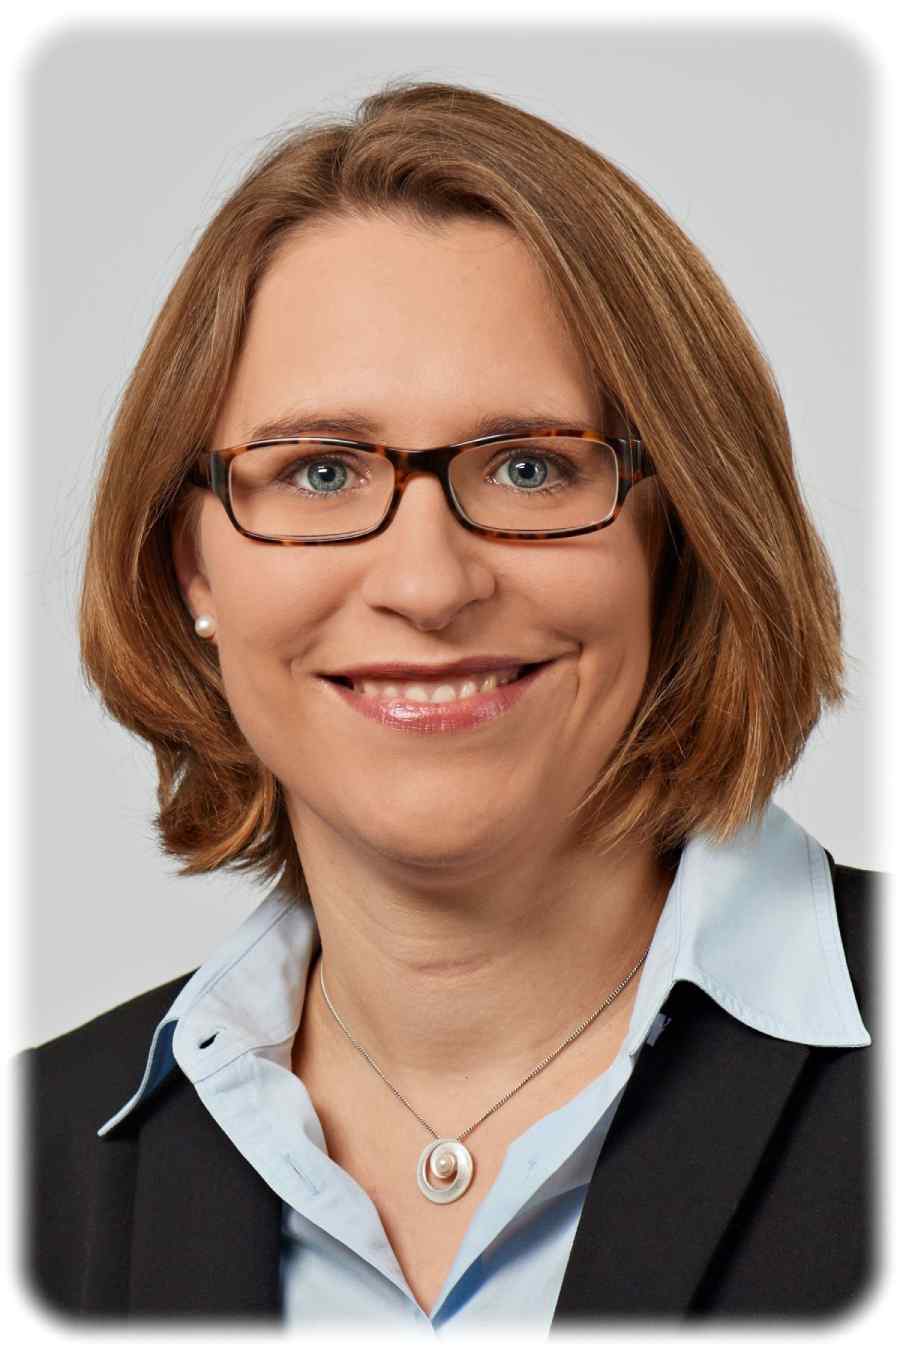 Susanne Bieller ist Generalseketärin der International Federation of Robotics. Foto: IFR